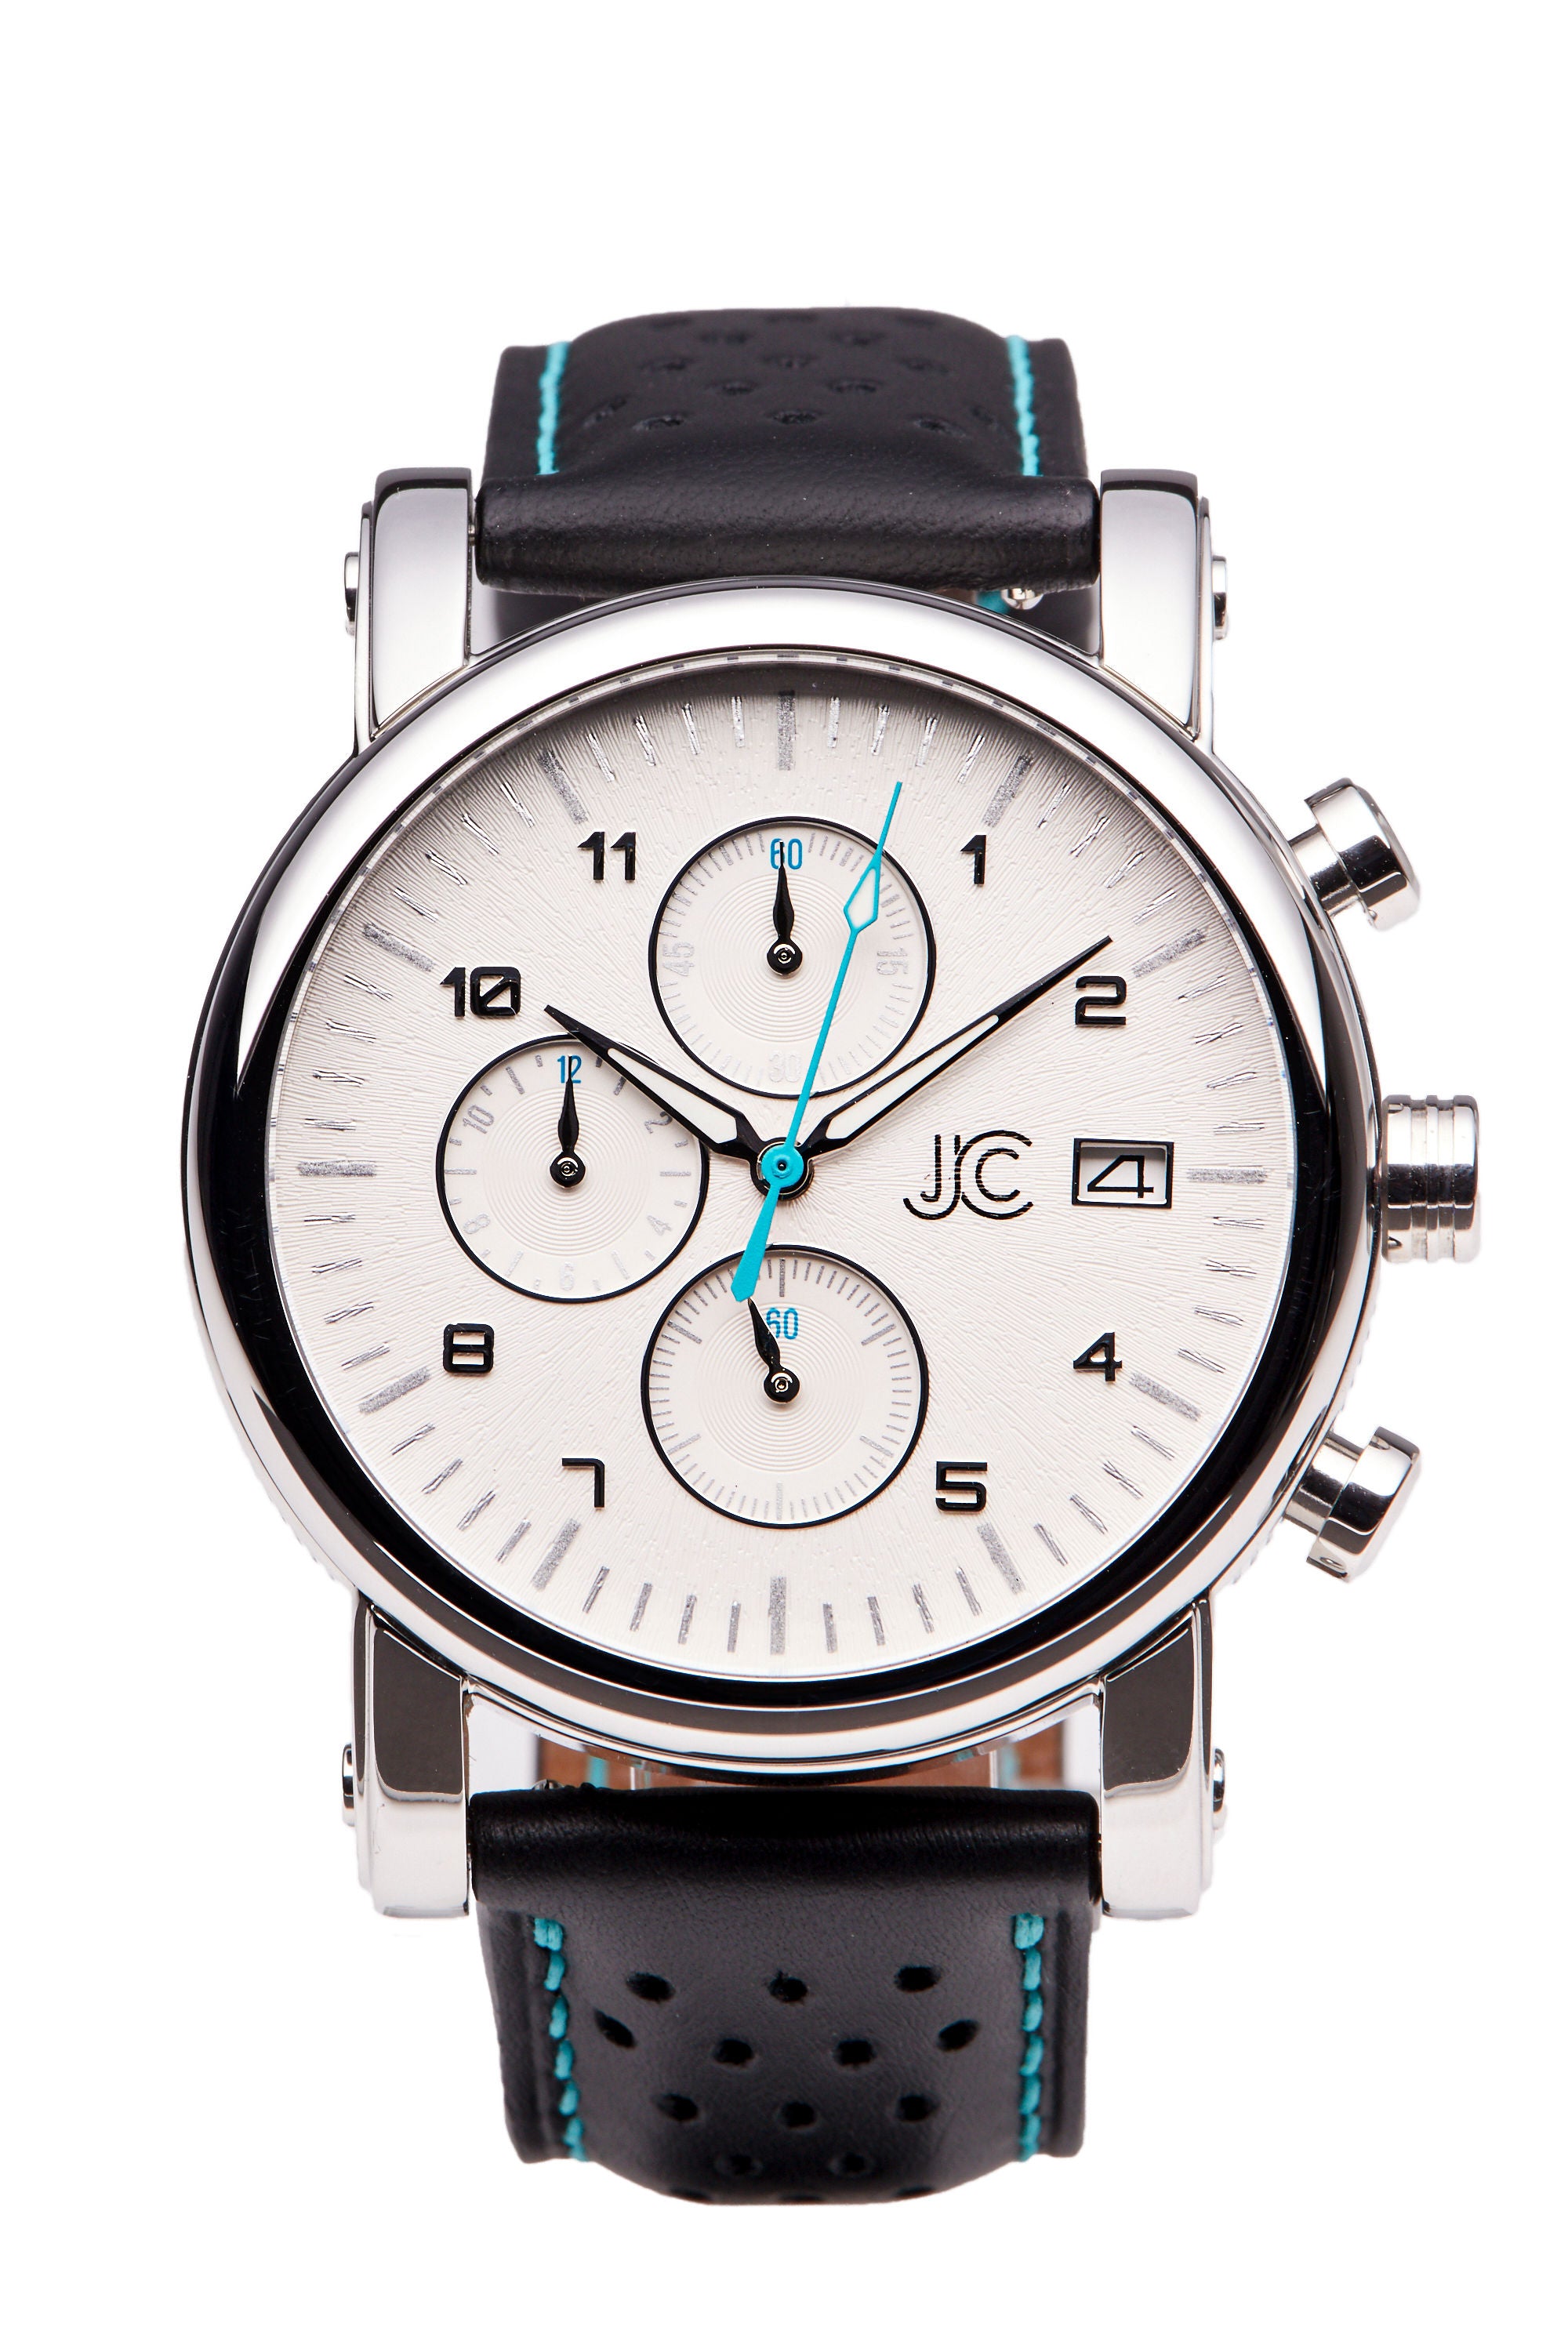 J.Ciro S3 White Dial Chronograph Watch